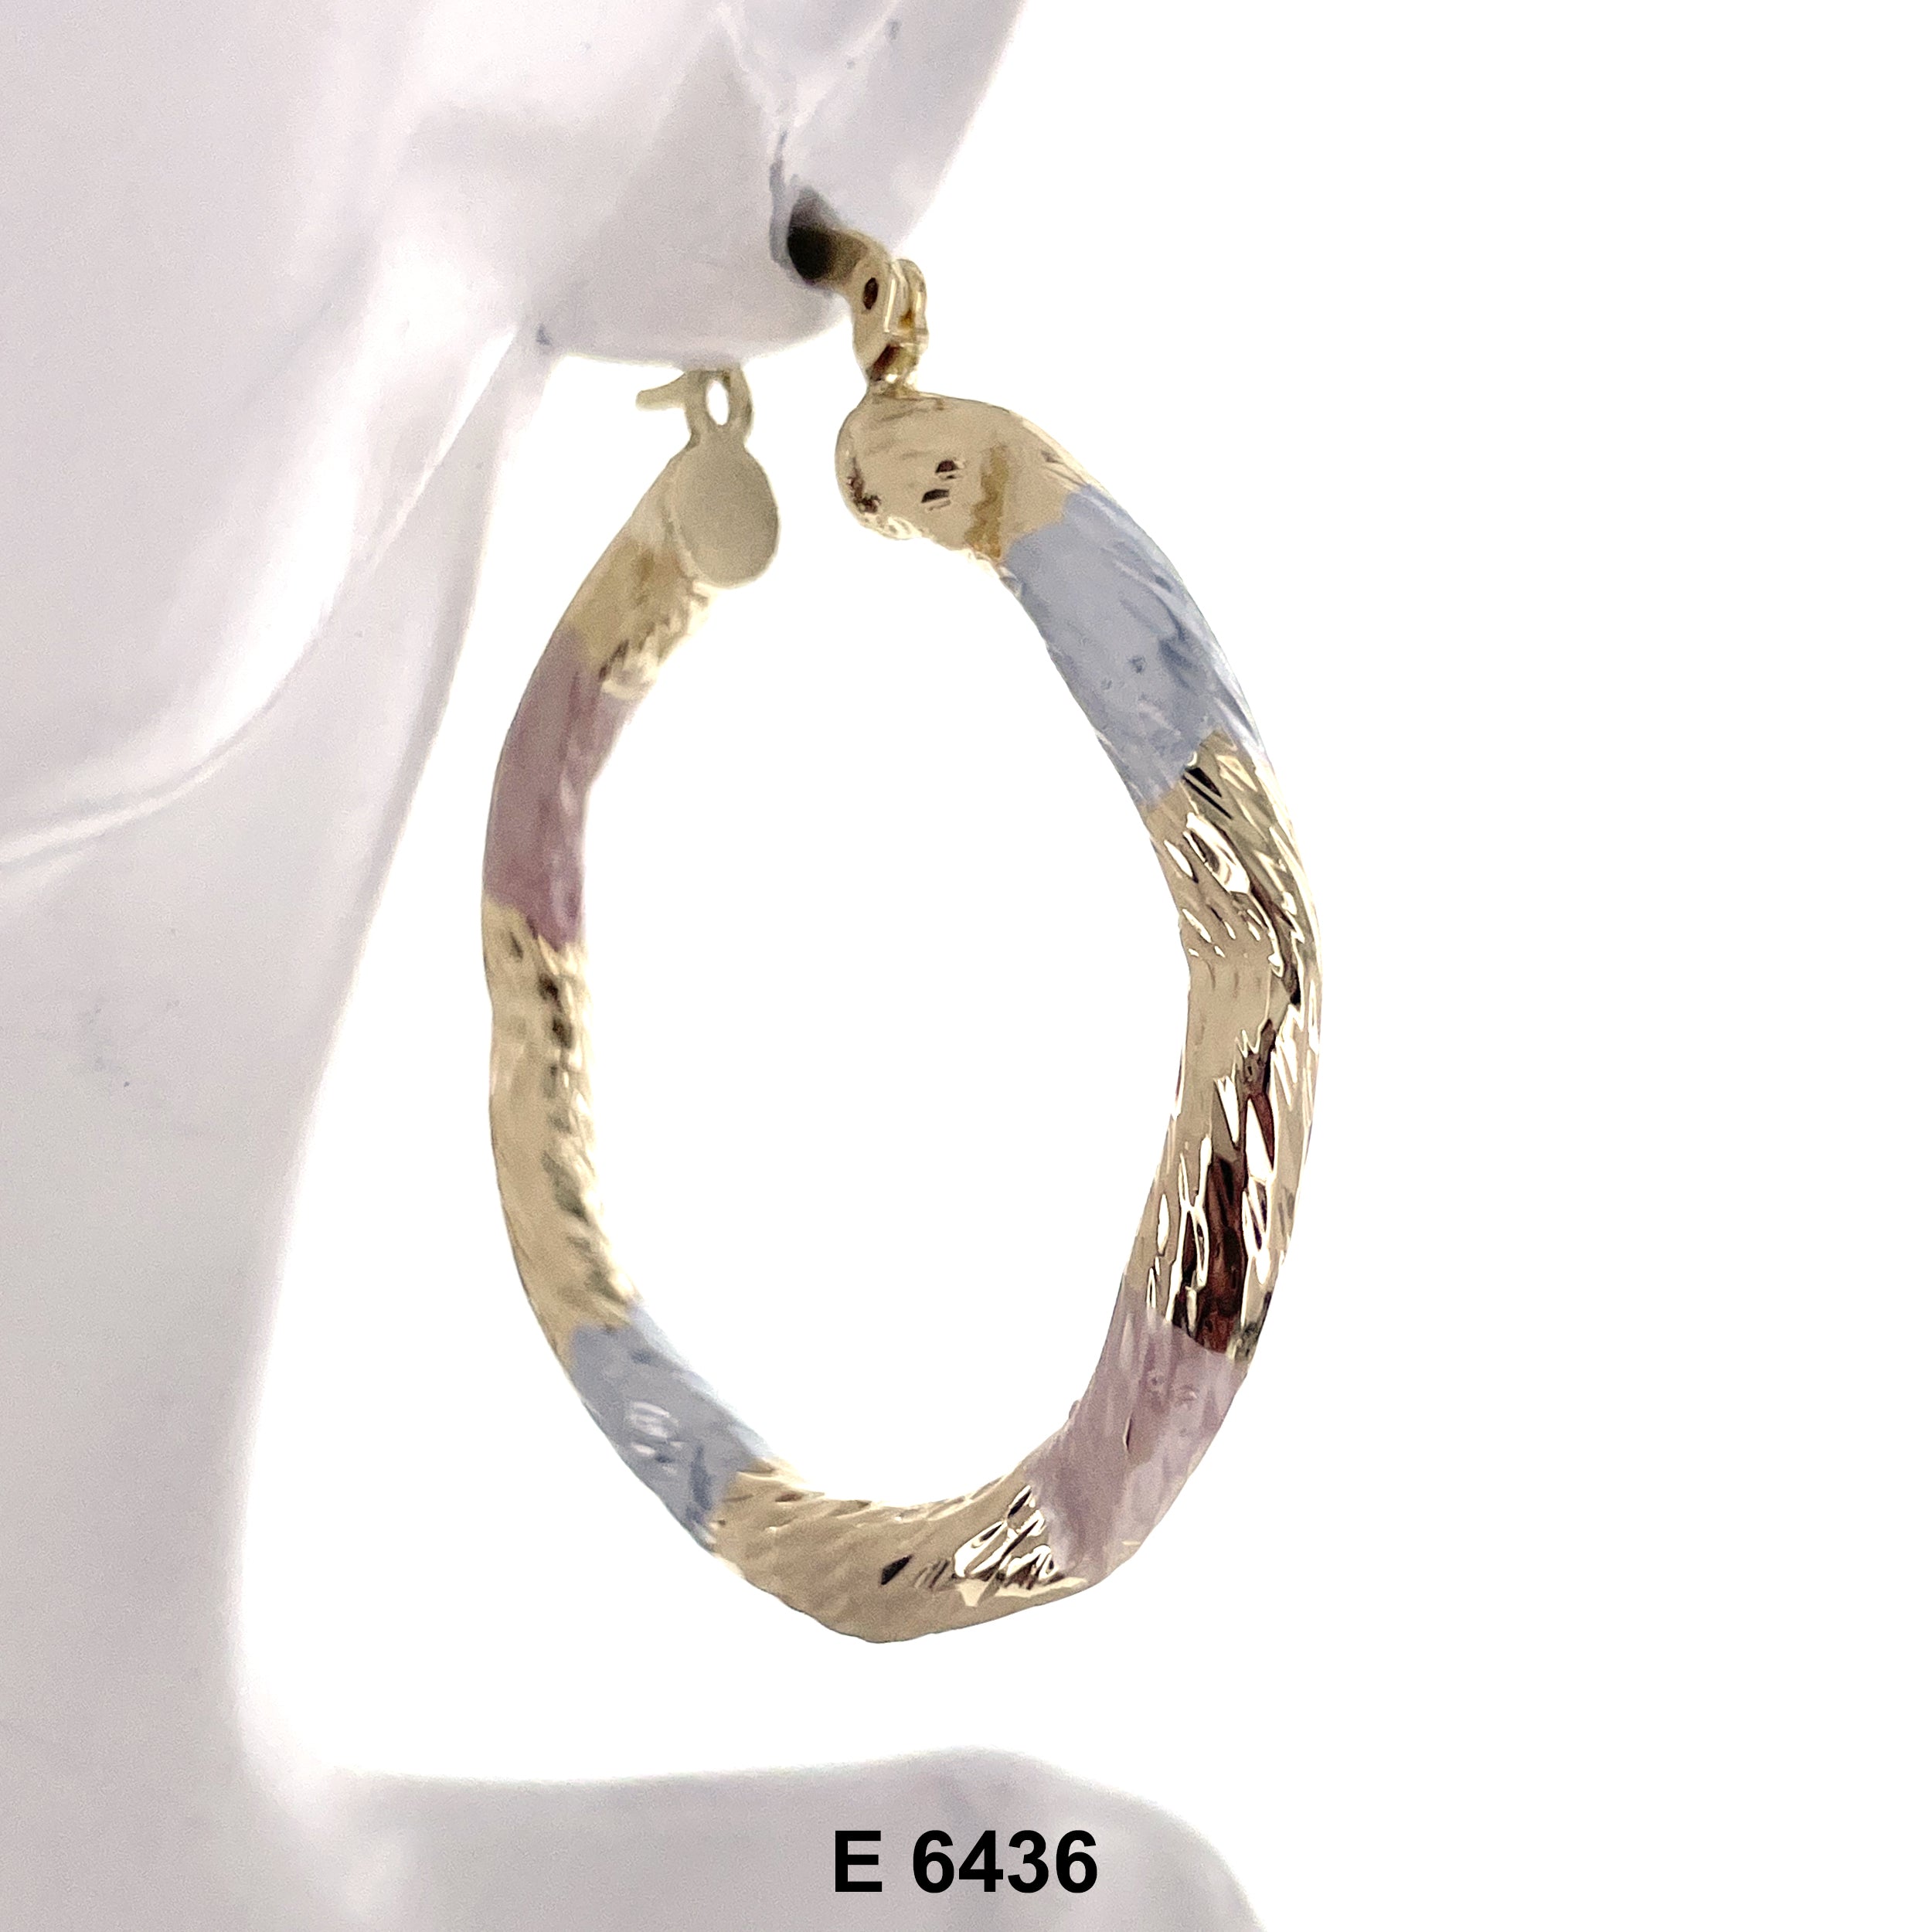 Engraved Hoop Earrings E 6436